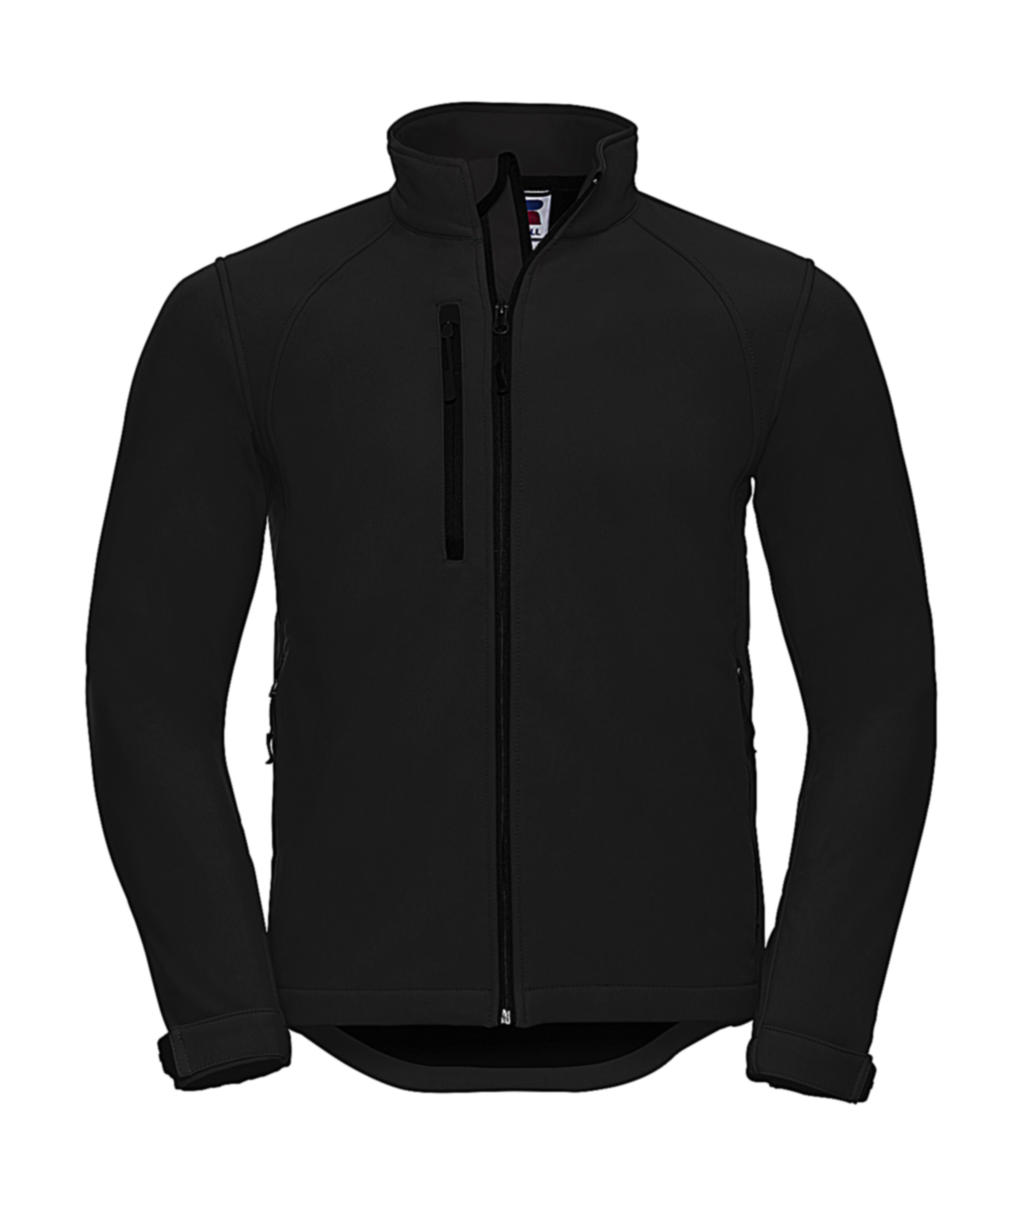  Softshell Jacket in Farbe Black